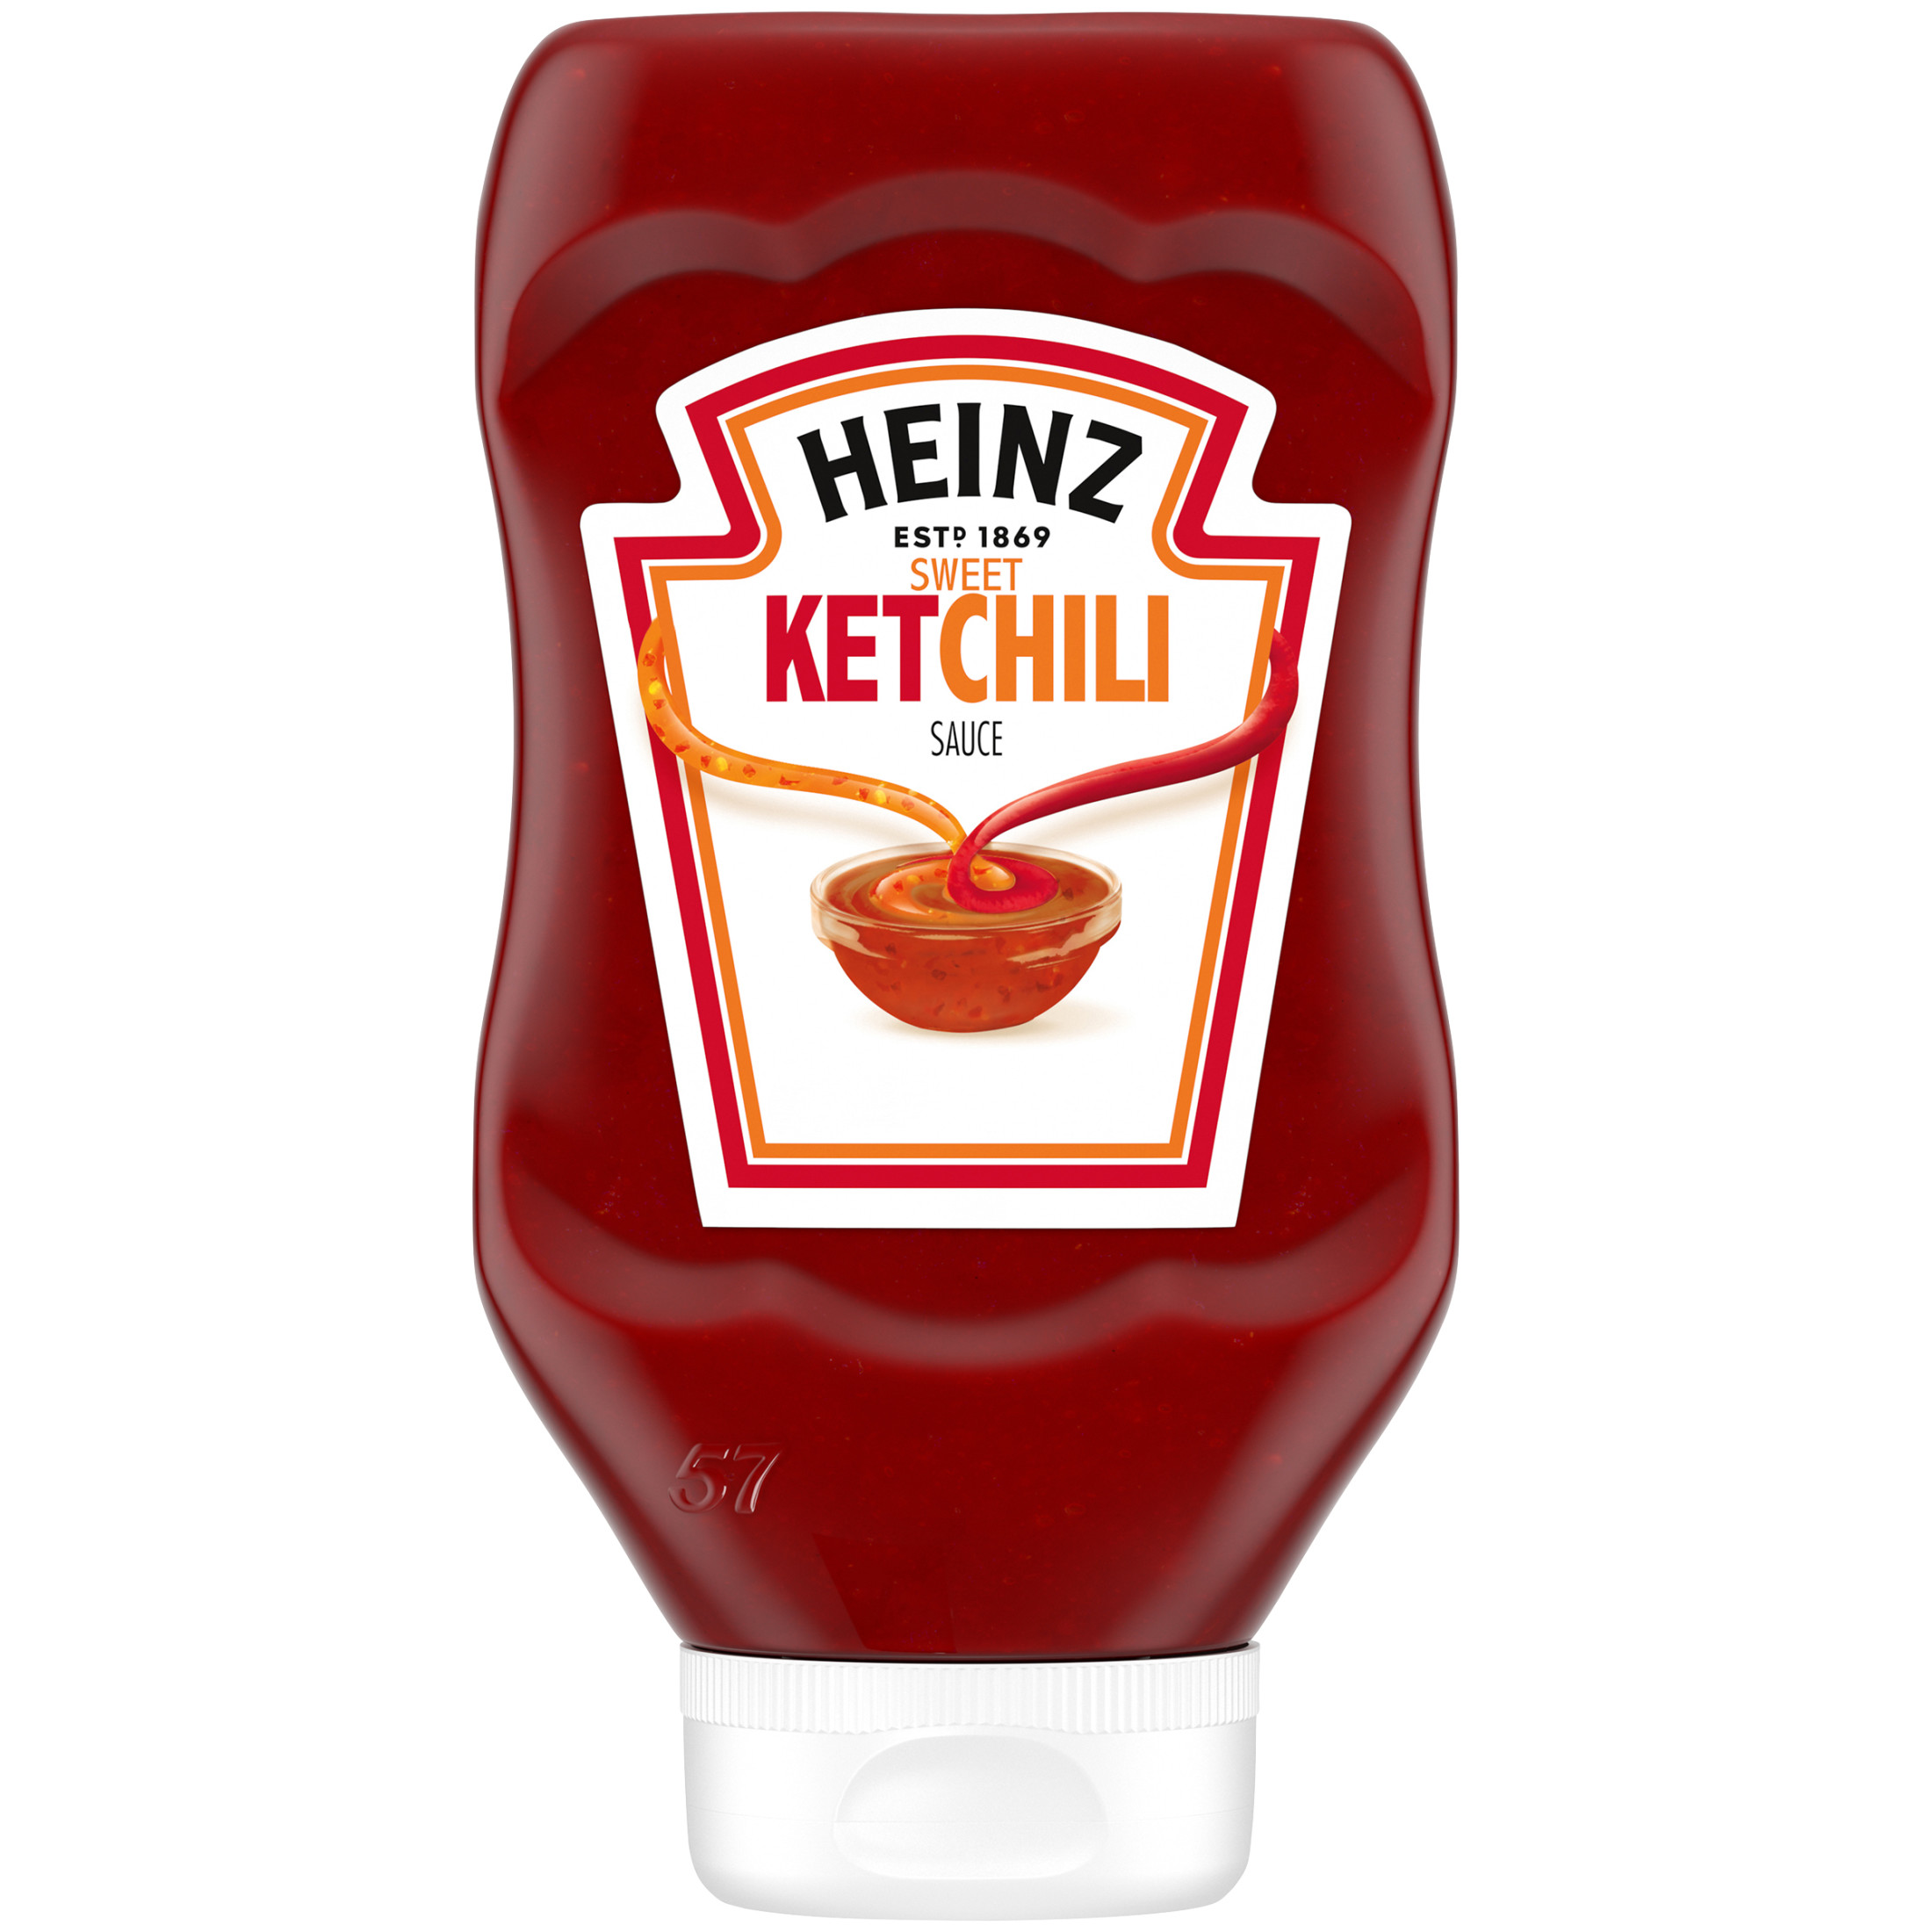 Heinz Sweet Ketchili Ketchup & Chili Sauce, 15.5 fl oz Bottle - image 1 of 14